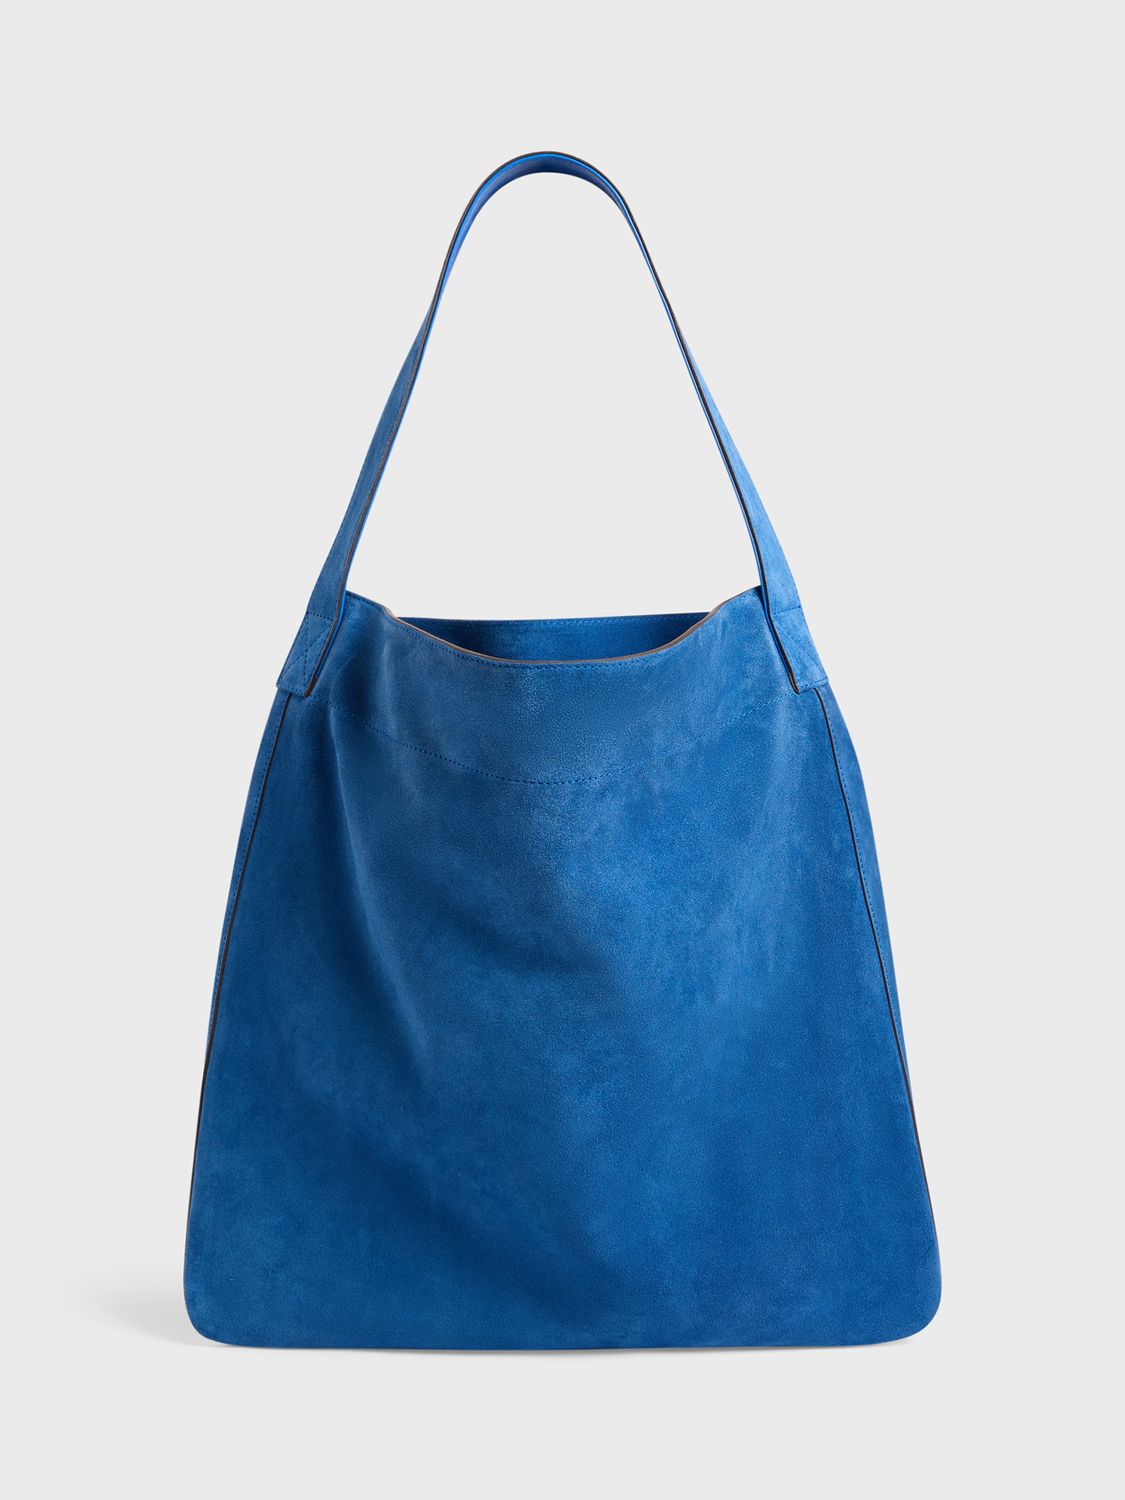 Gerard Darel The Lady Bag, Blue, One Size